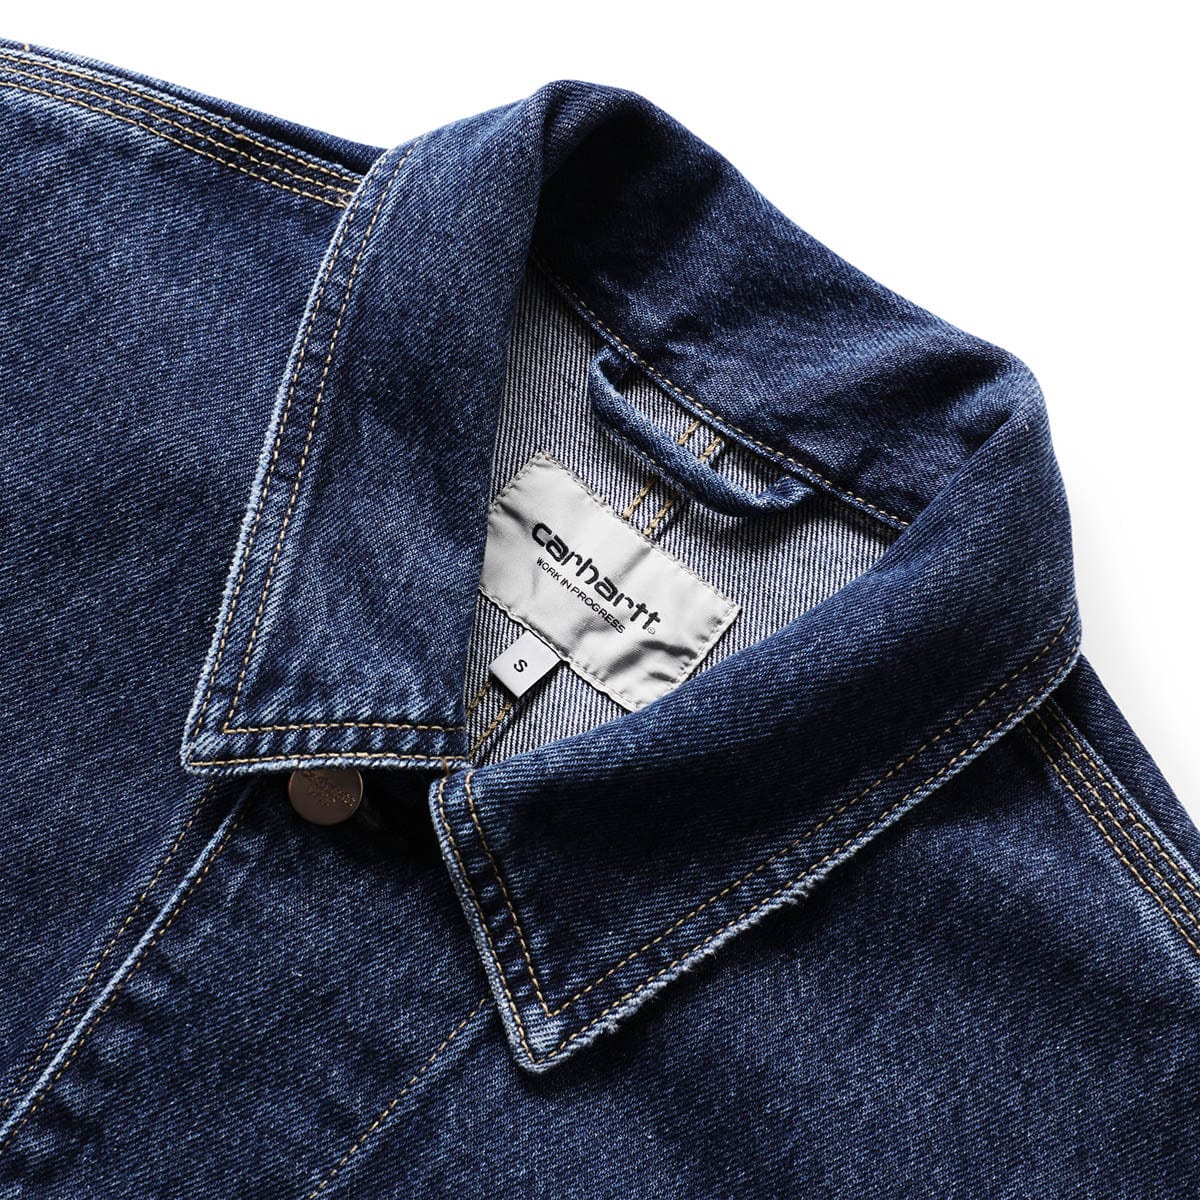 Carhartt WIP, Carhartt WIP jeans, jackets & shirts